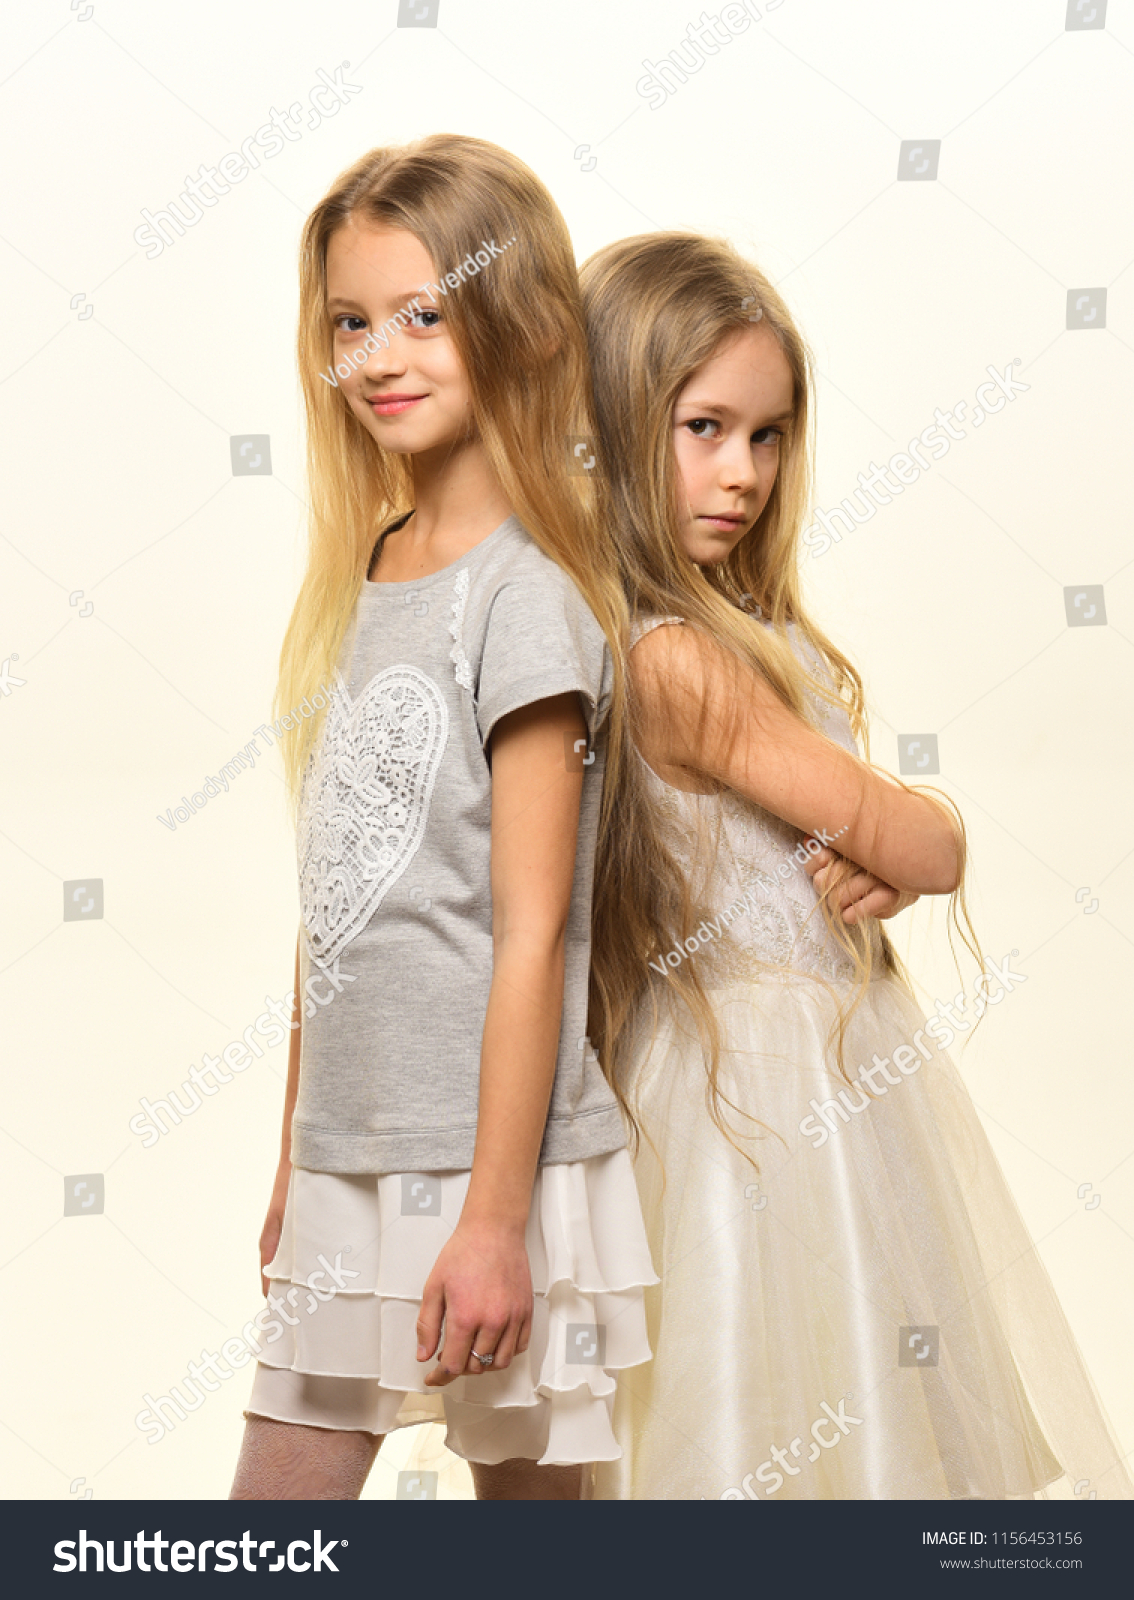 kid fashion. two small girls follow kid fashion. kid fashion with pretty sisters. kid fashion for girls in fashionable clothes. #1156453156